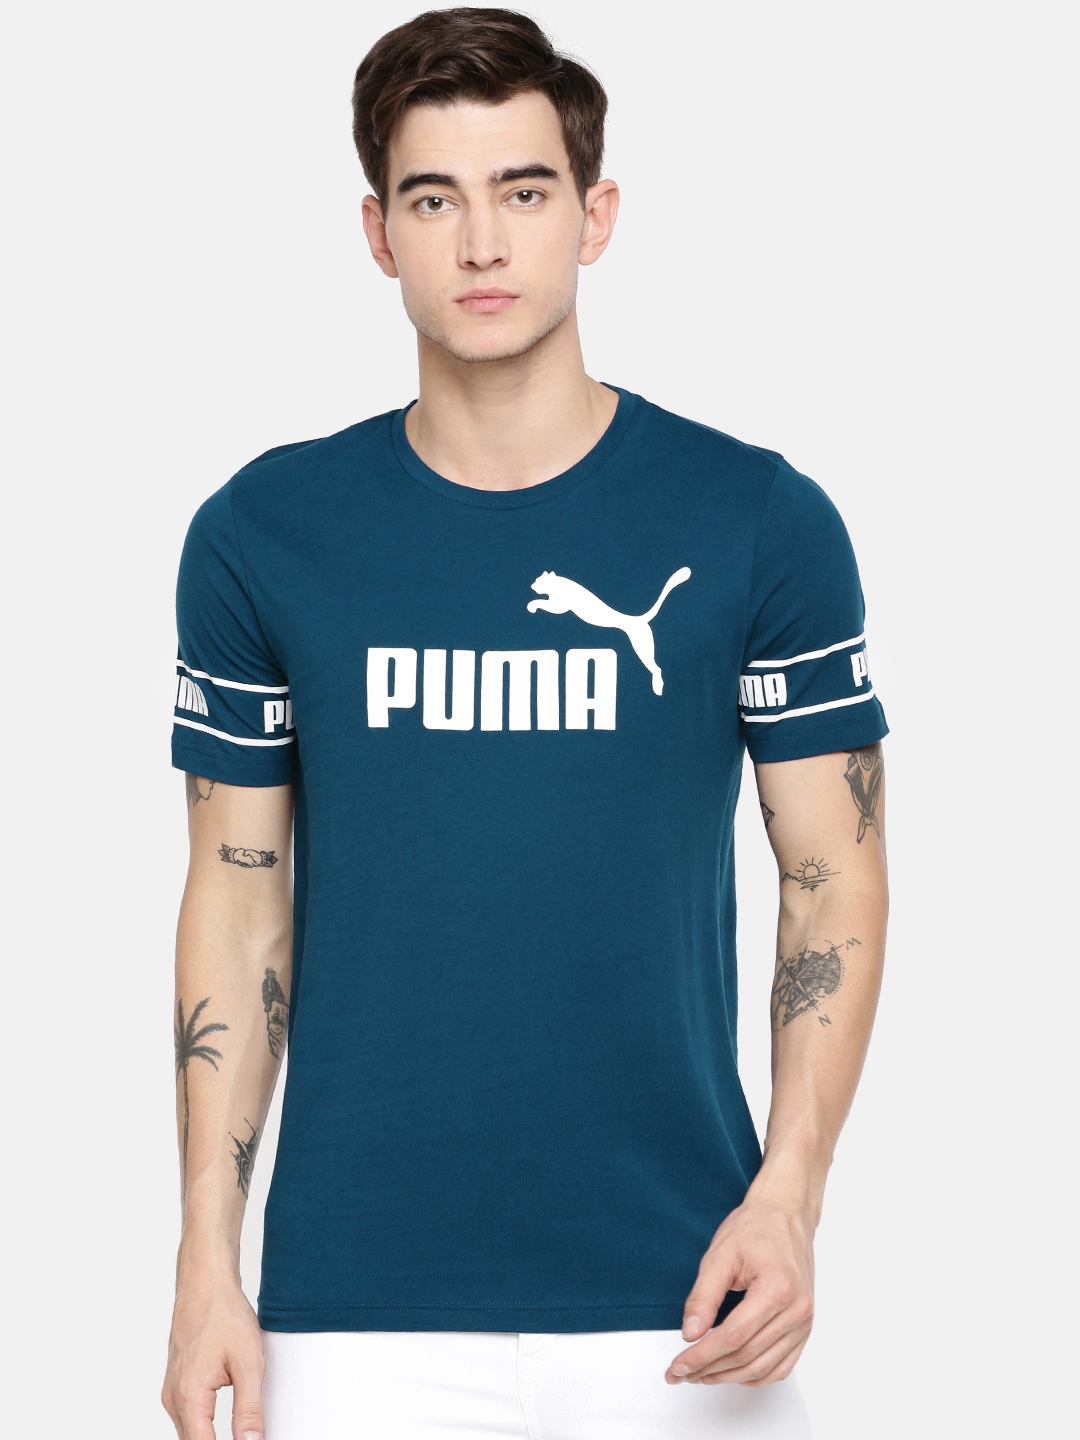 Buy Puma Men Teal Blue Printed Amplified Big Logo Round Neck T Shirt - Tshirts for Men 10660080 